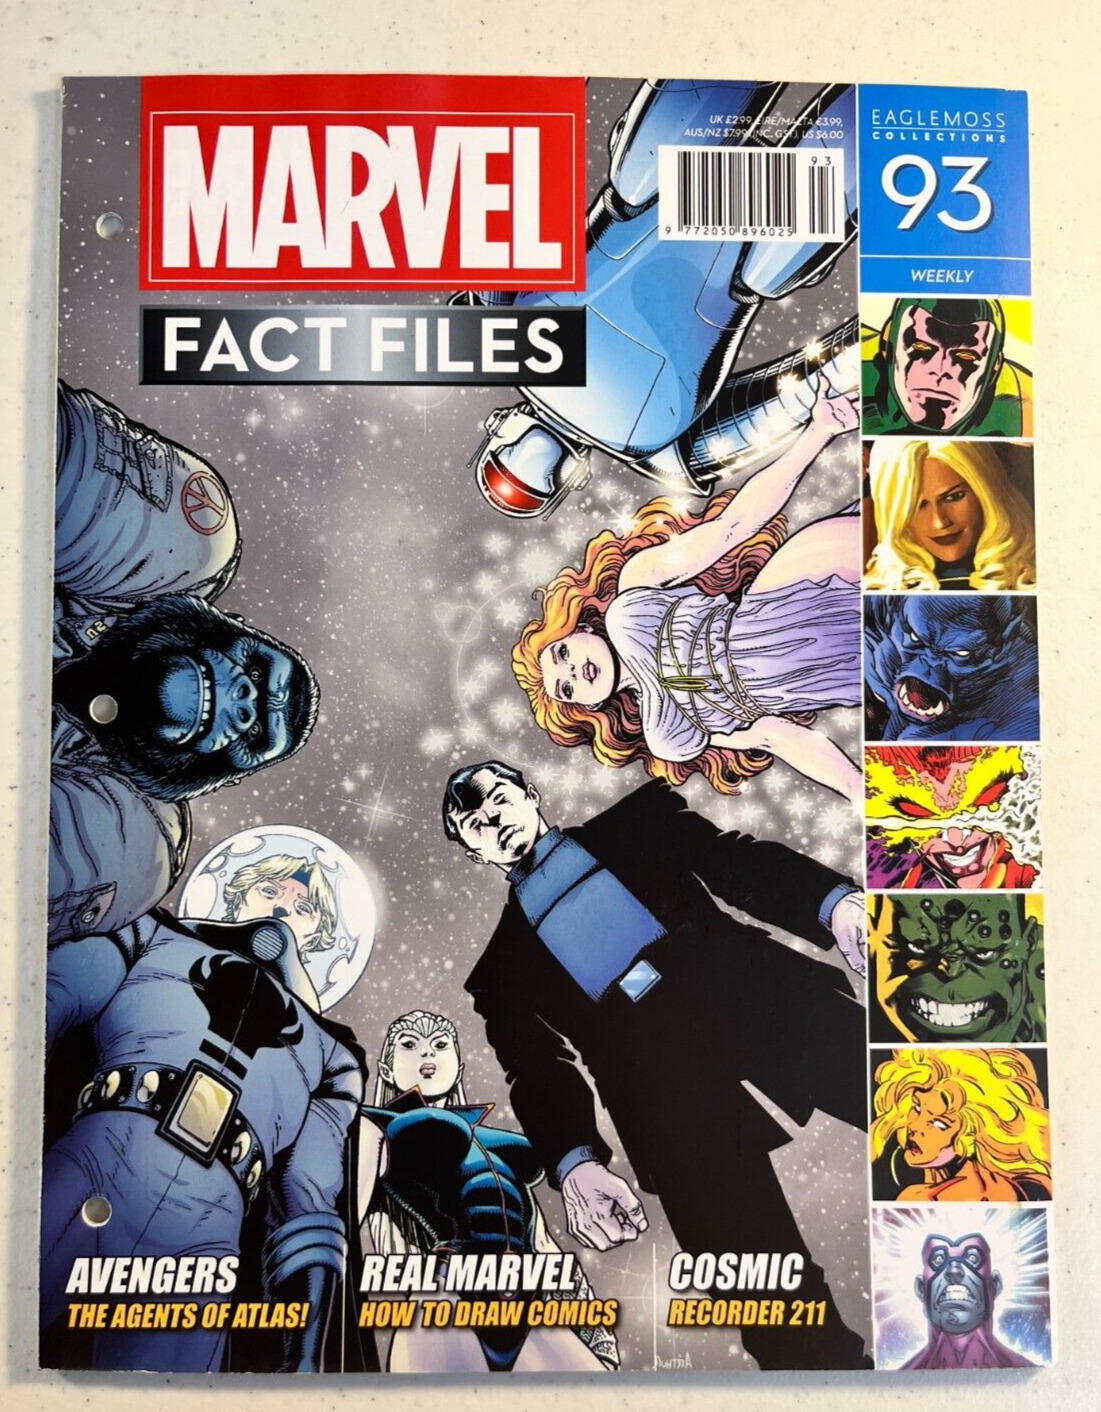 Marvel Fact Files 93 Agents of Atlas Hulk Eaglemoss Spider-man Avengers 1 Packet